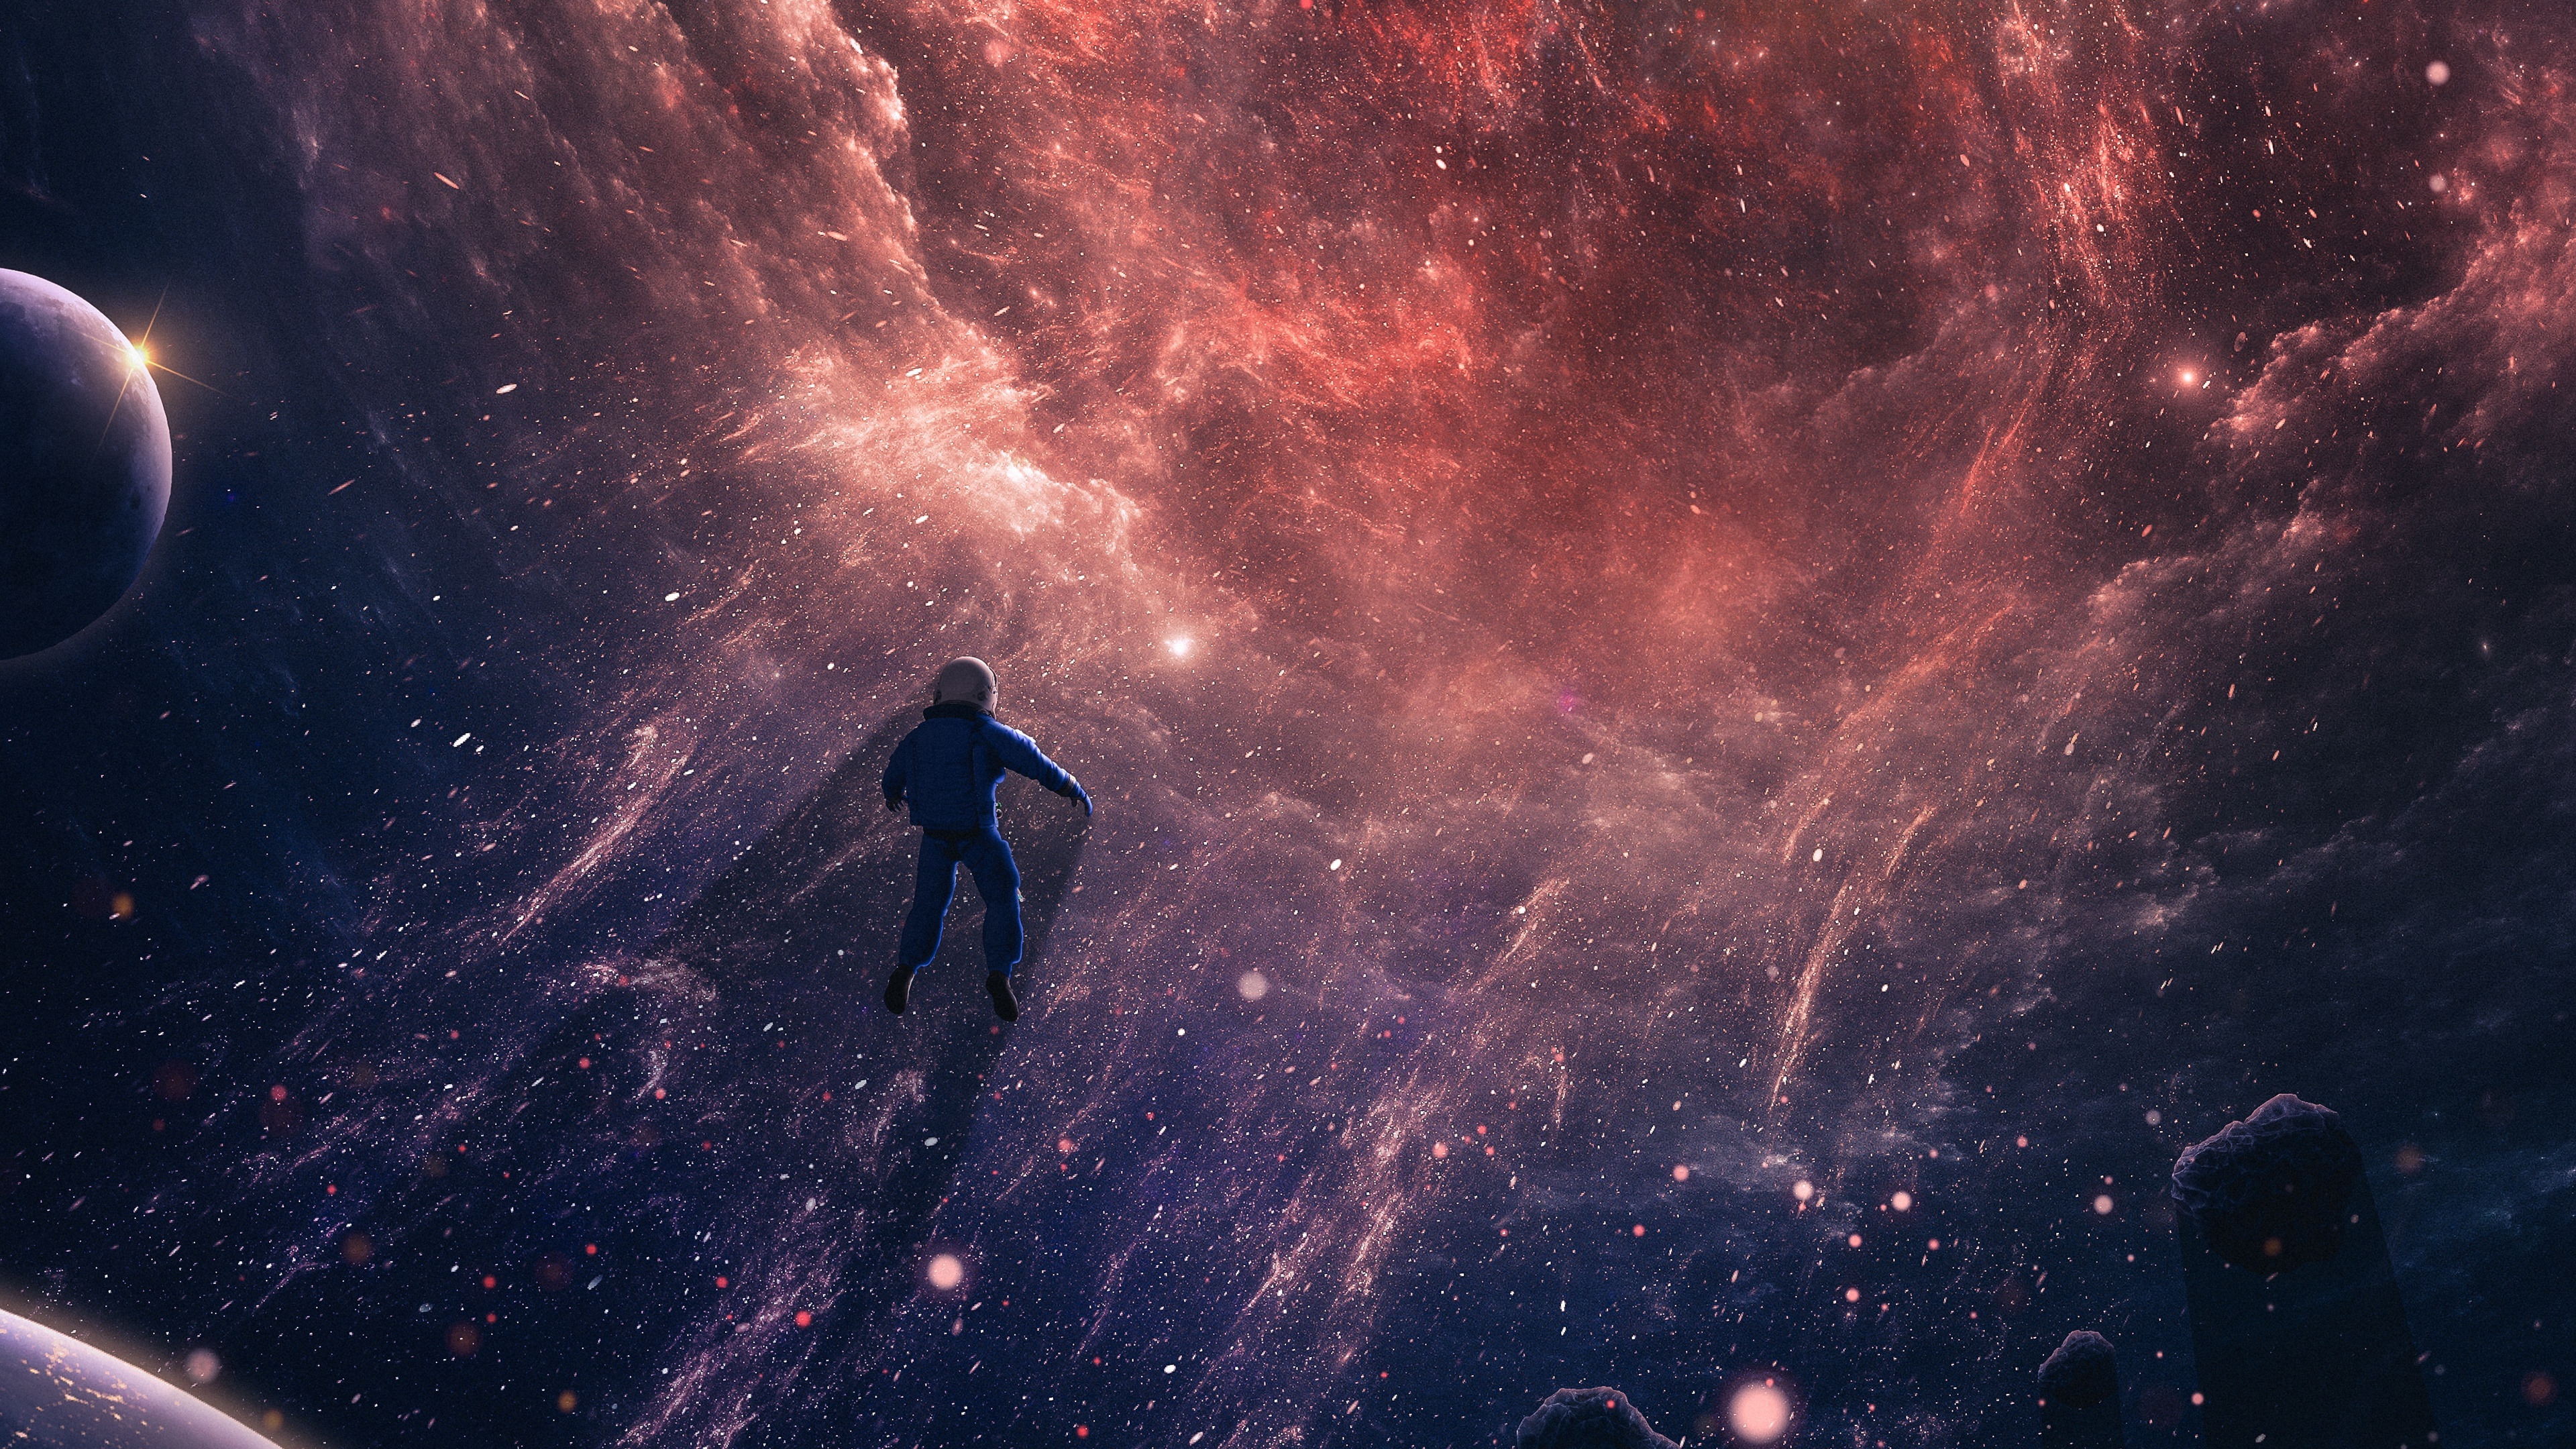 Universe, Astronaut wallpaper, Deep space exploration, Cosmic mystique, 3840x2160 4K Desktop